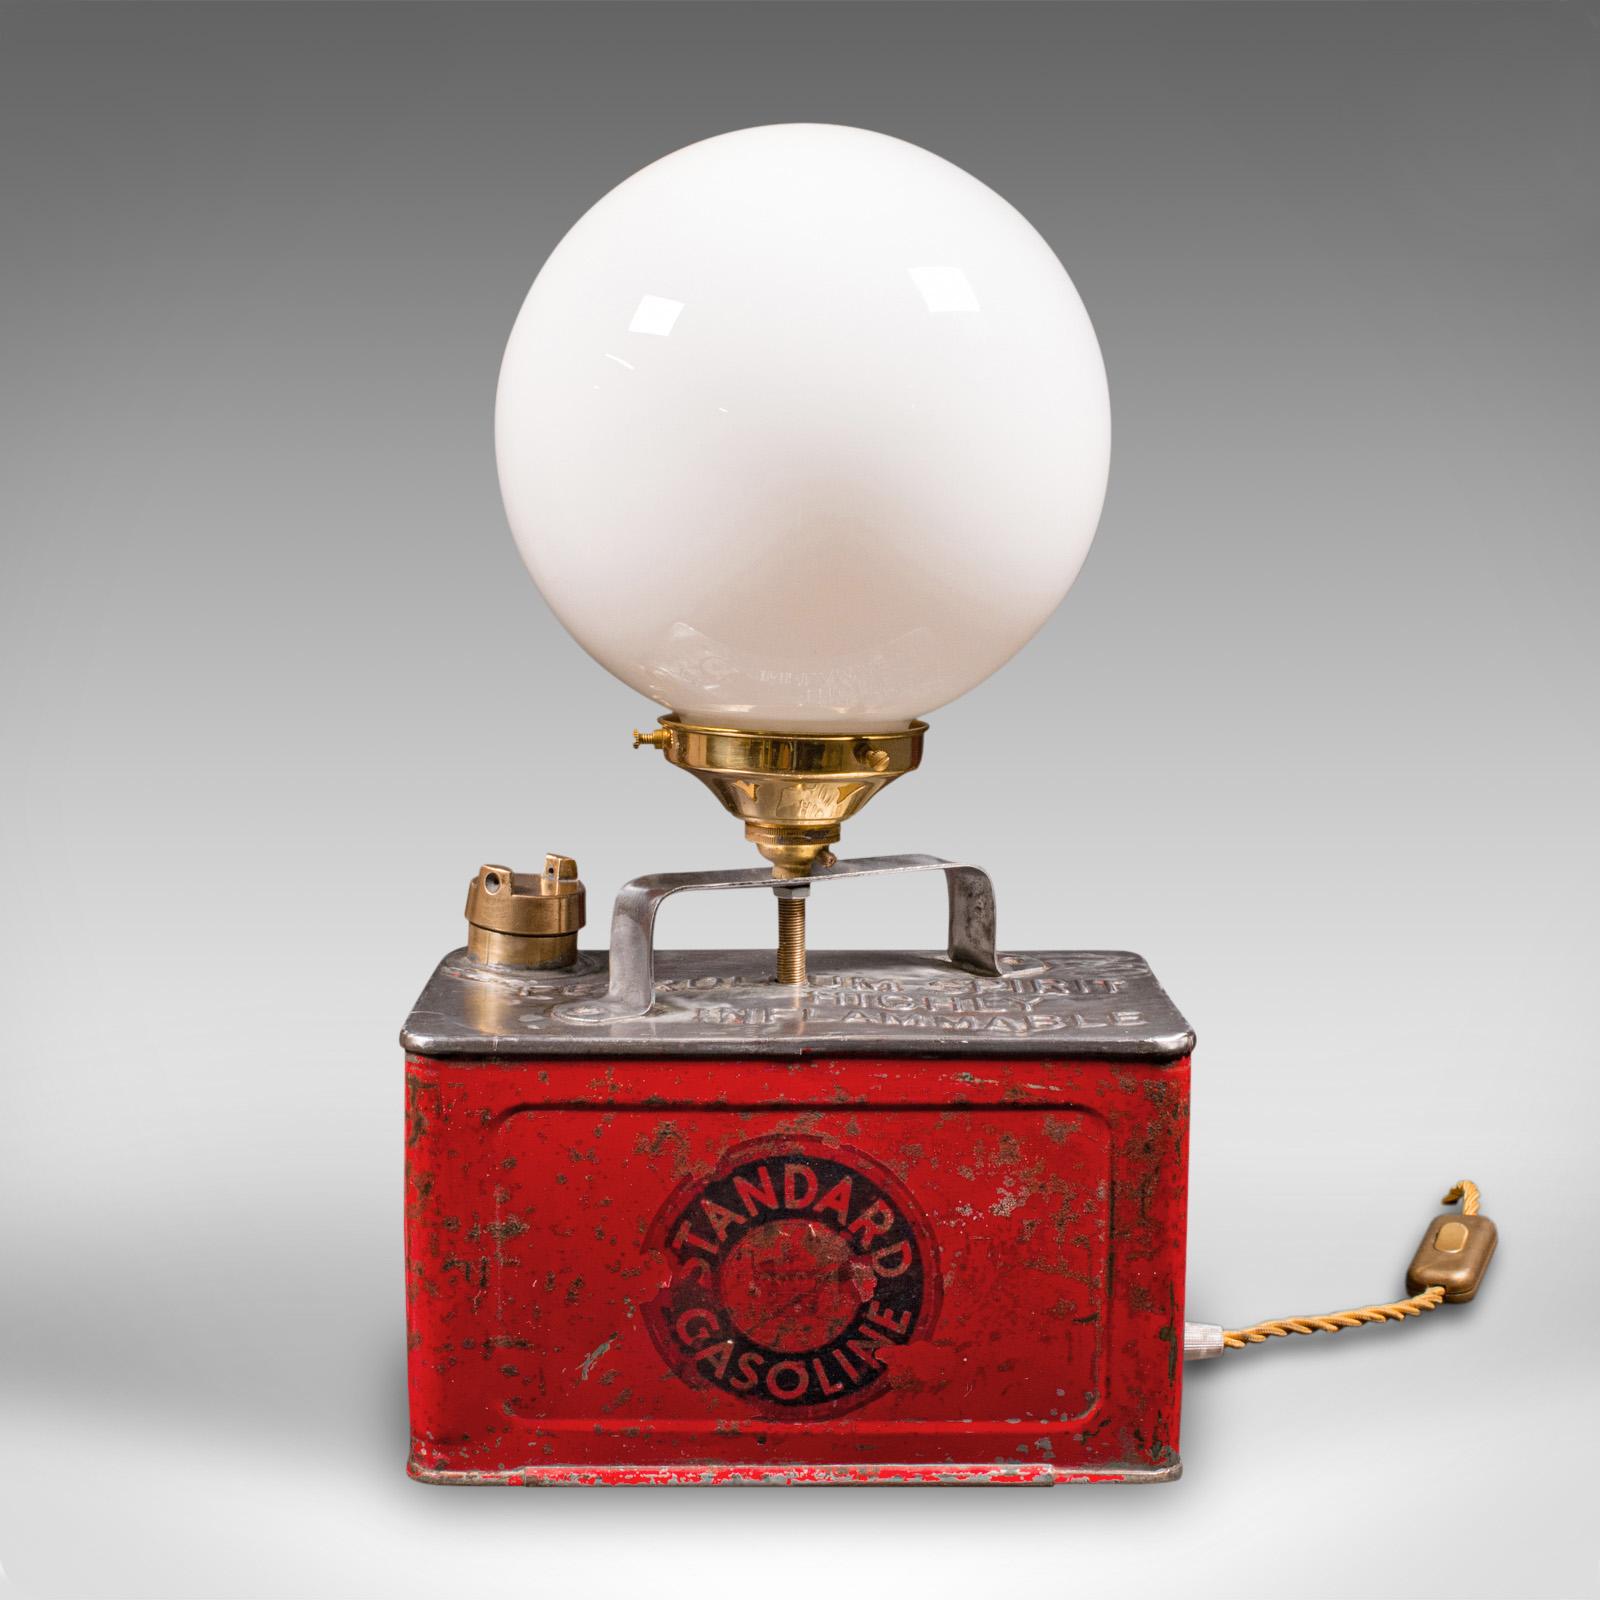 Mid-Century Modern Vintage Converted Petrol Can Lamp, Automobilia, Decorative, Accent Light, C.1950 For Sale